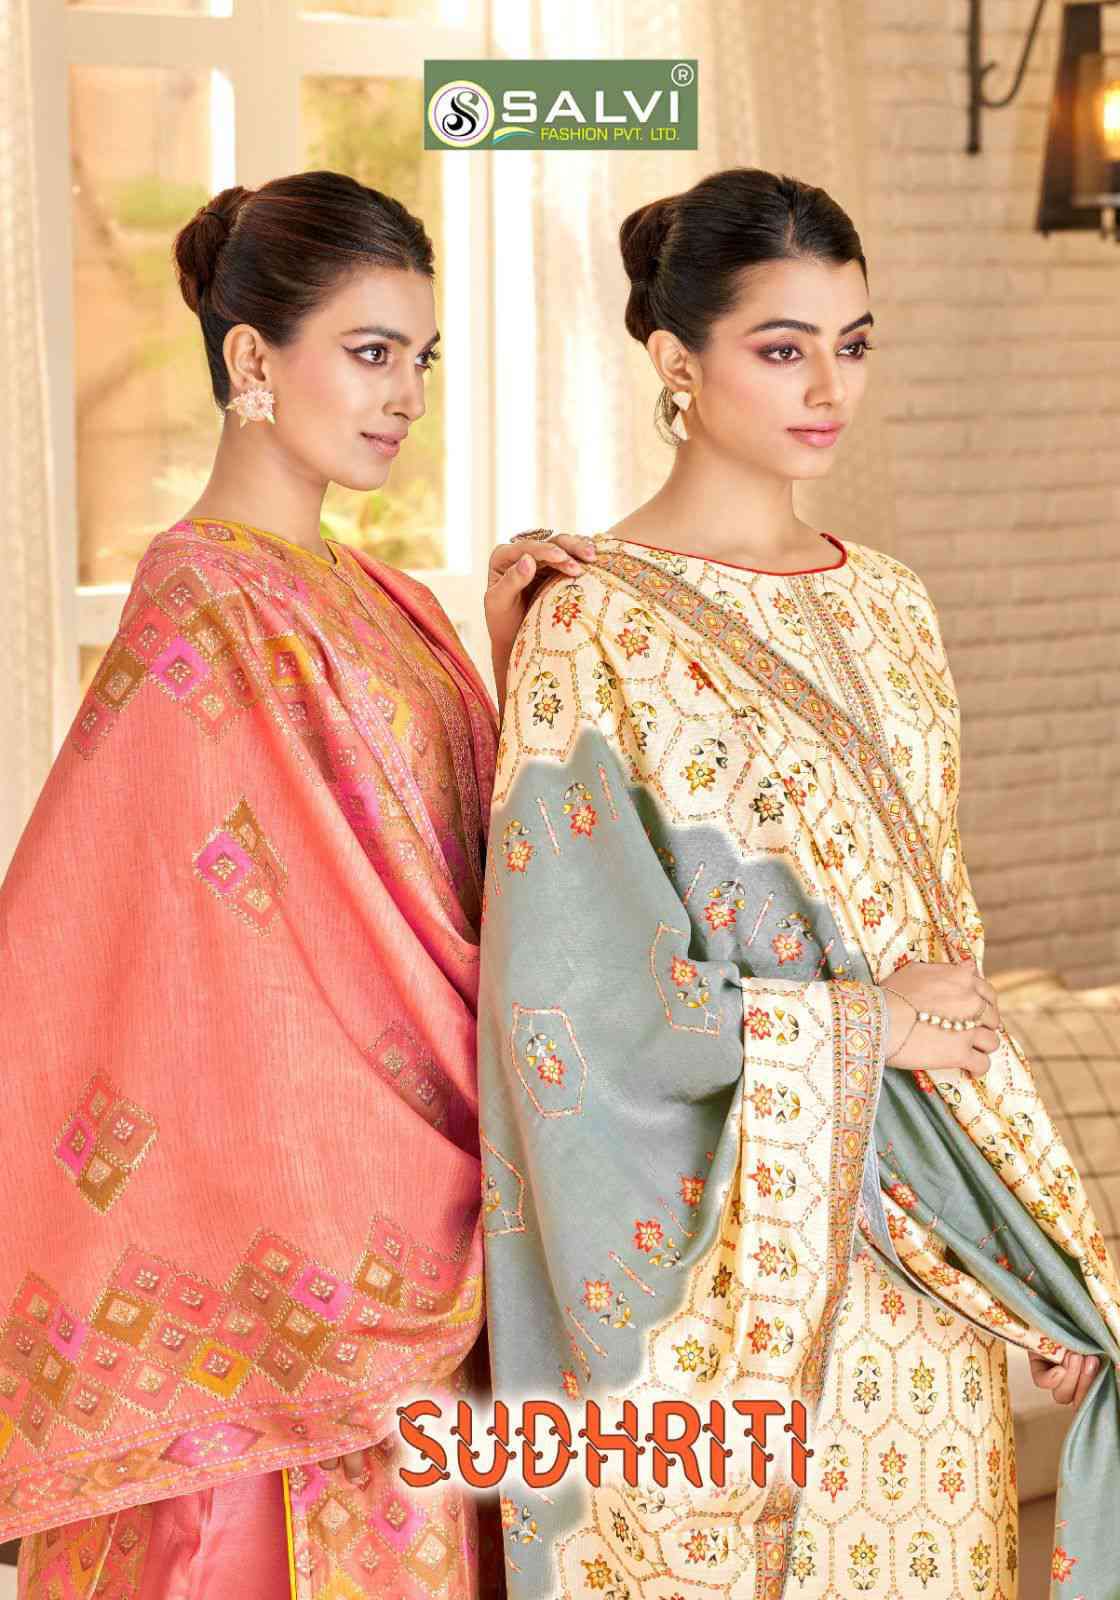 Salvi fashion Sudhriti Exclusive Silk Salwar Suit Catalog Supplier